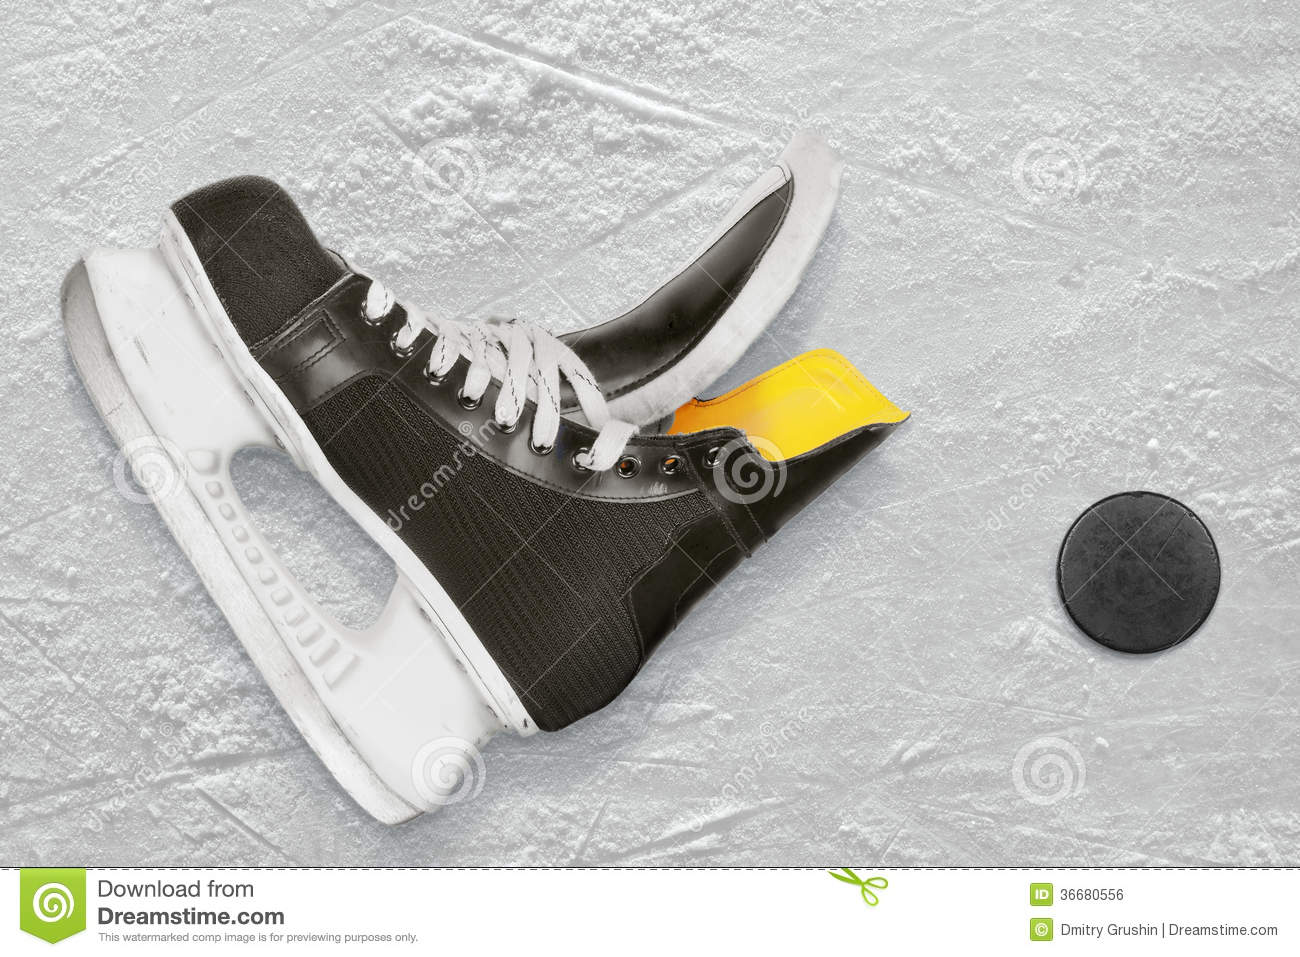 Hockey Skates And Puck Royalty Free Stock Image   Image  36680556